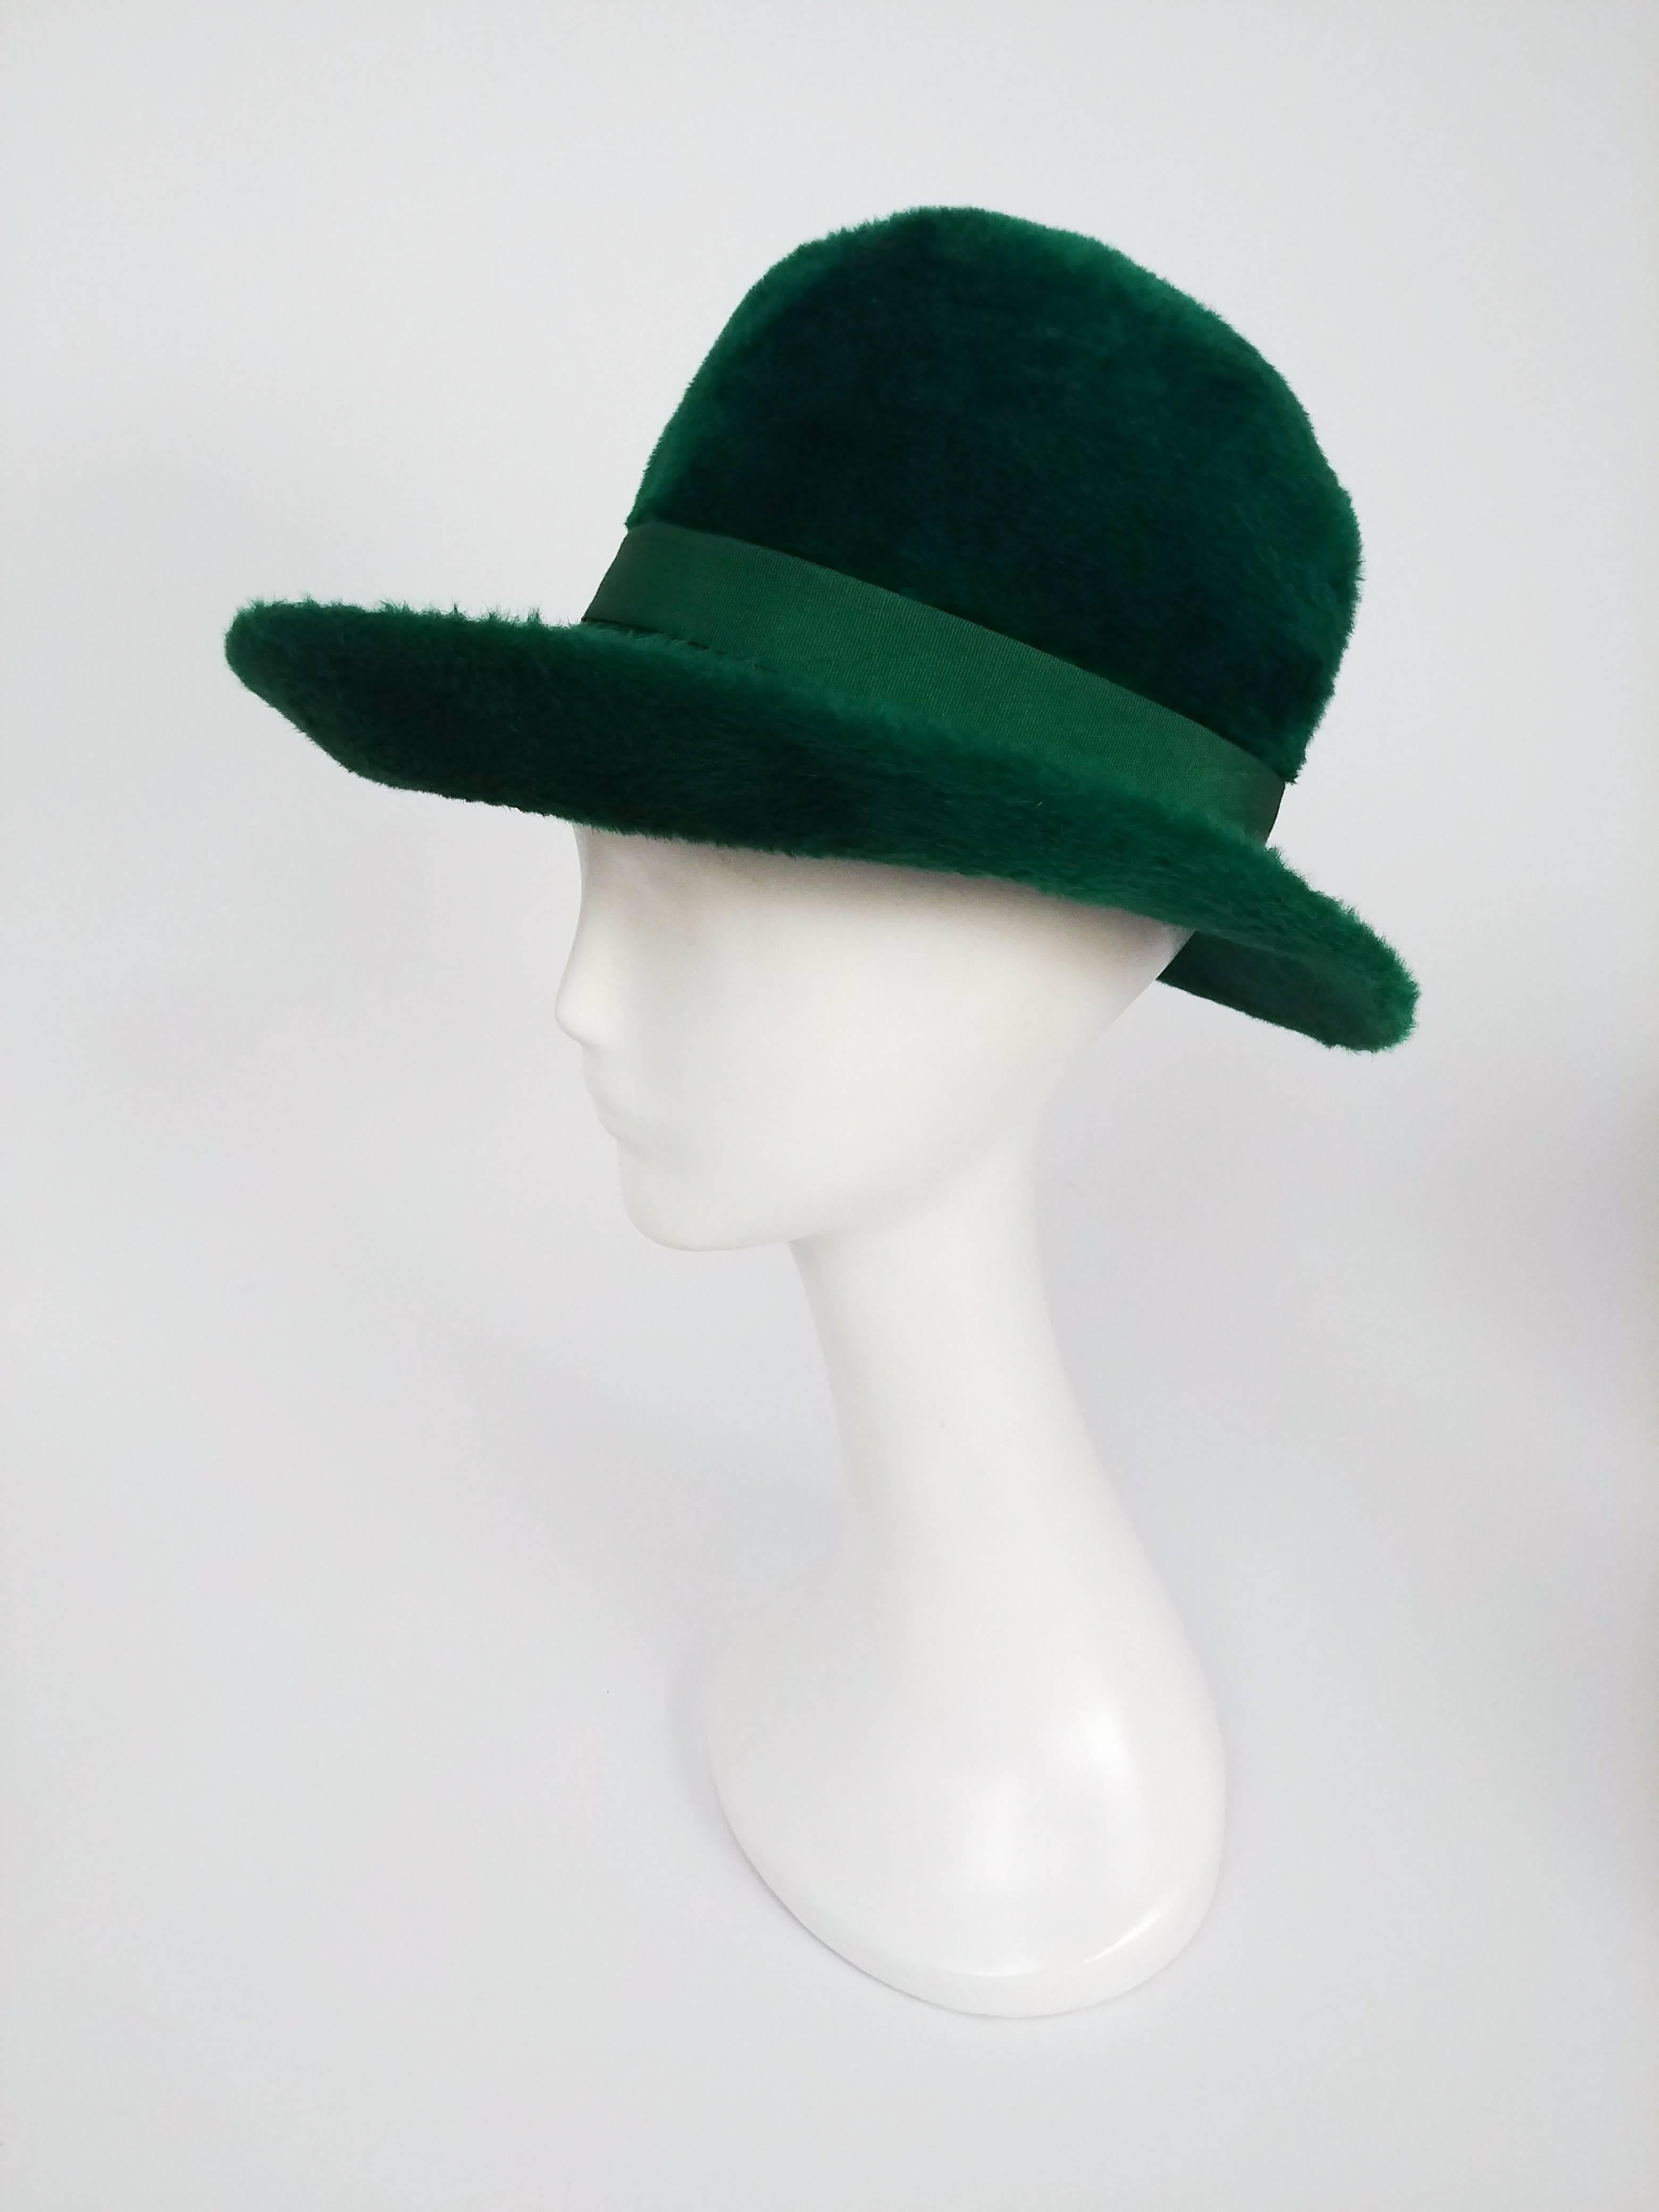 1960s Mr. John Emerald Green Fur Felt Hat. Wide brim, grosgrain ribbon outer band.